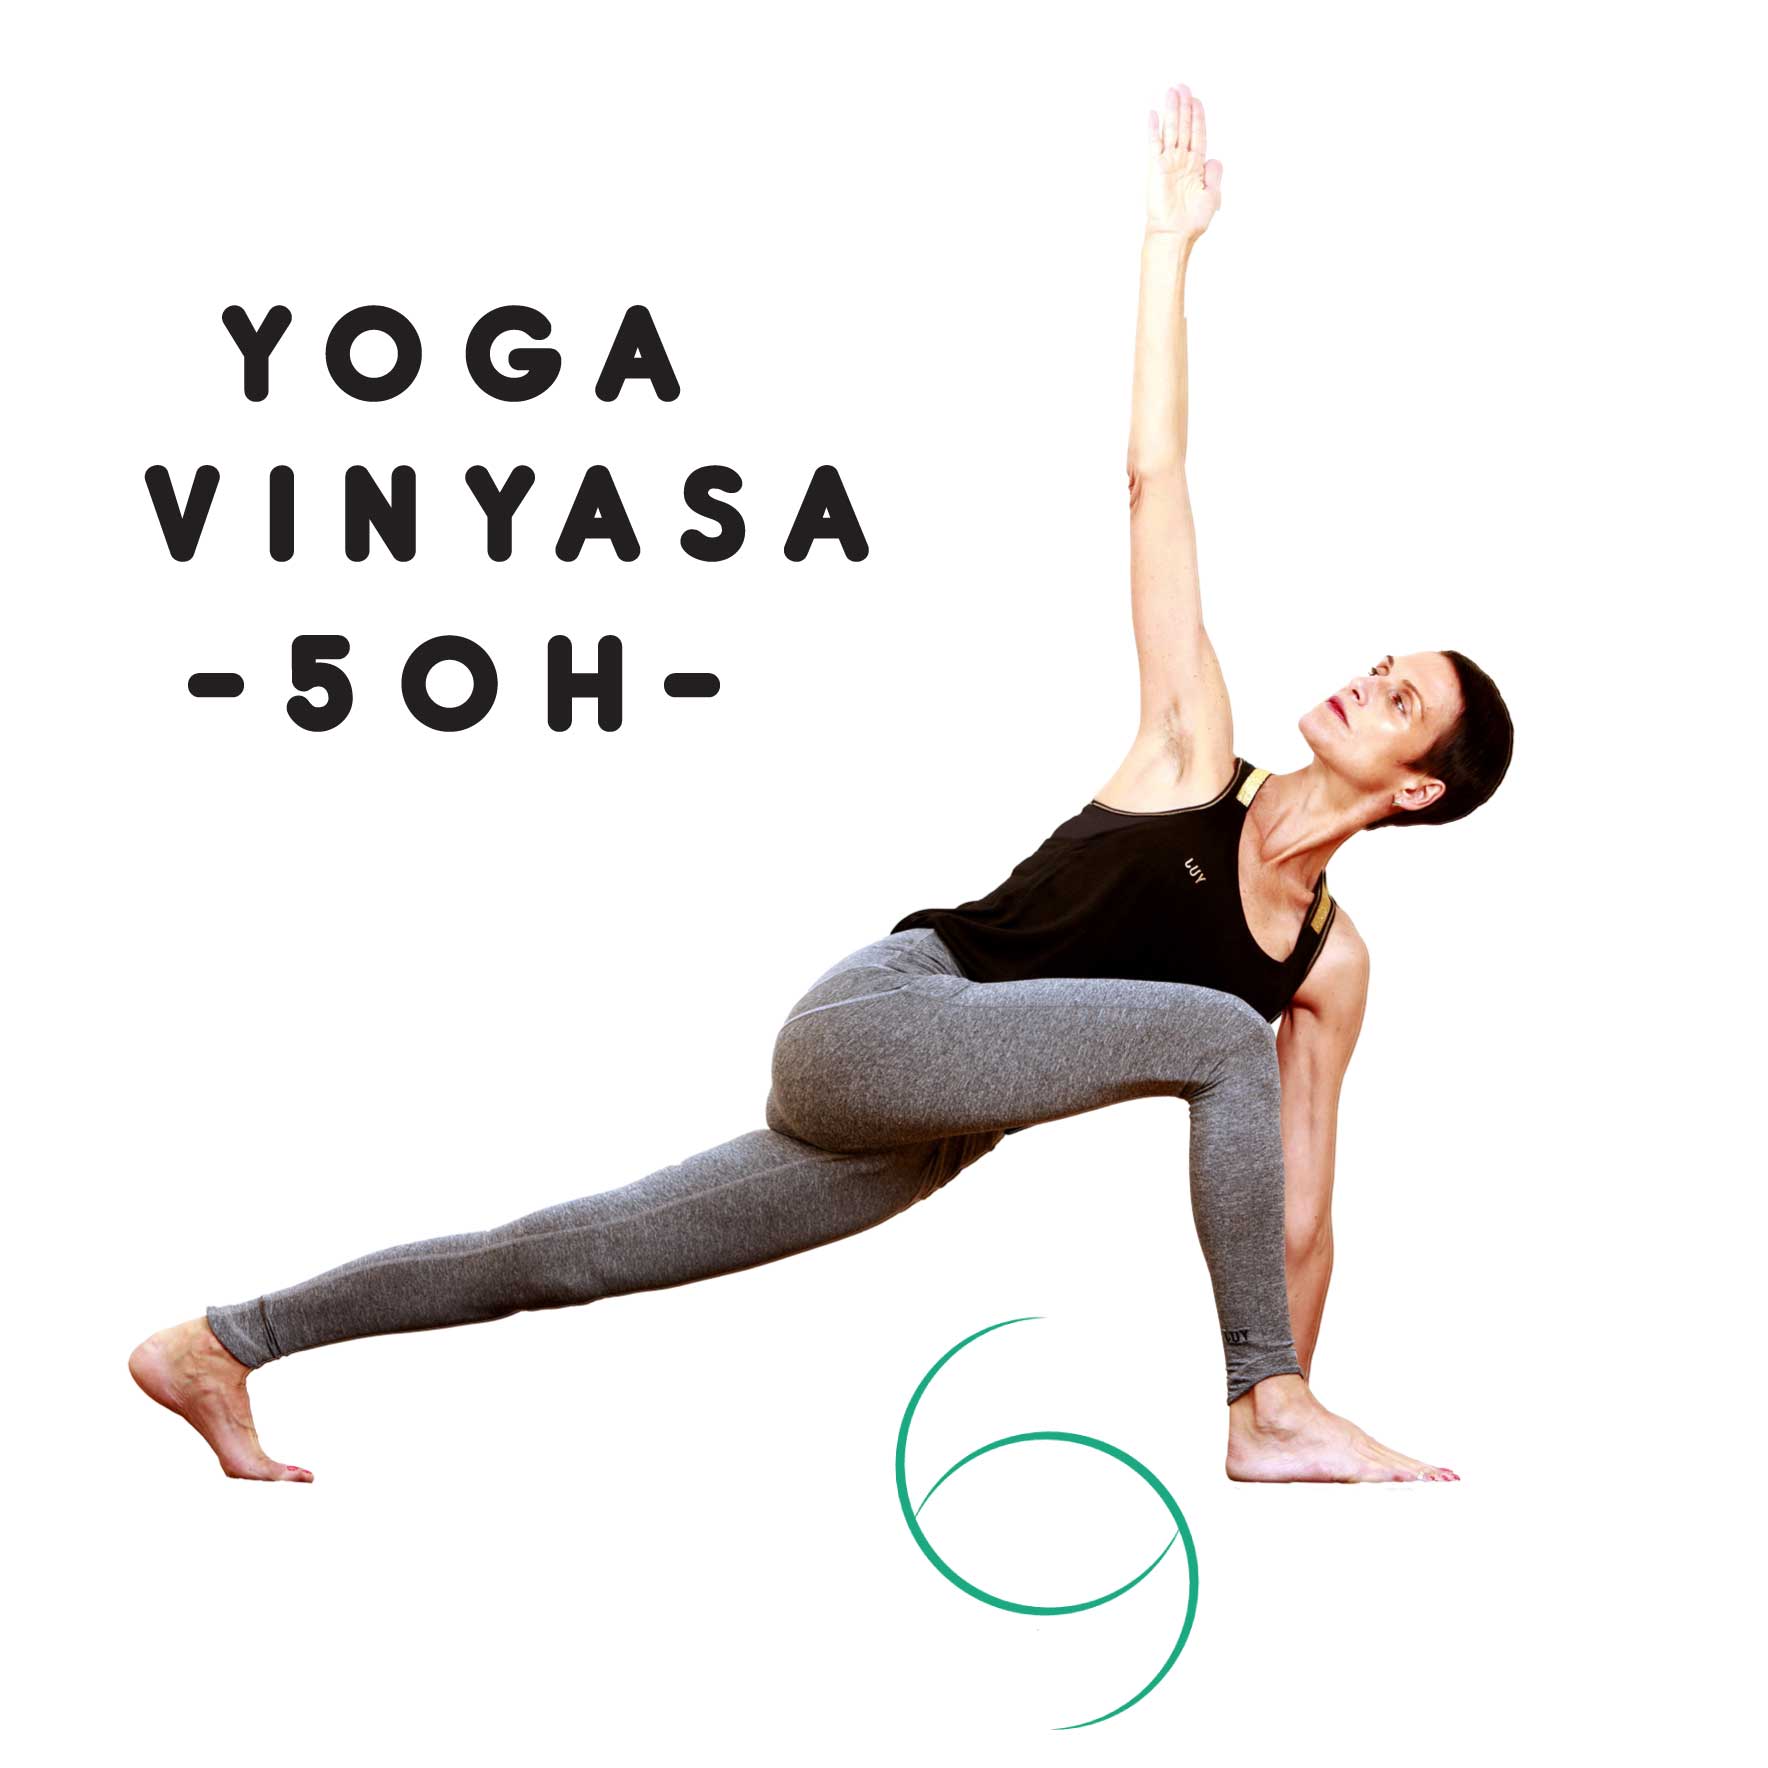 Fondations 50 heures Yoga Vinyasa Aligné